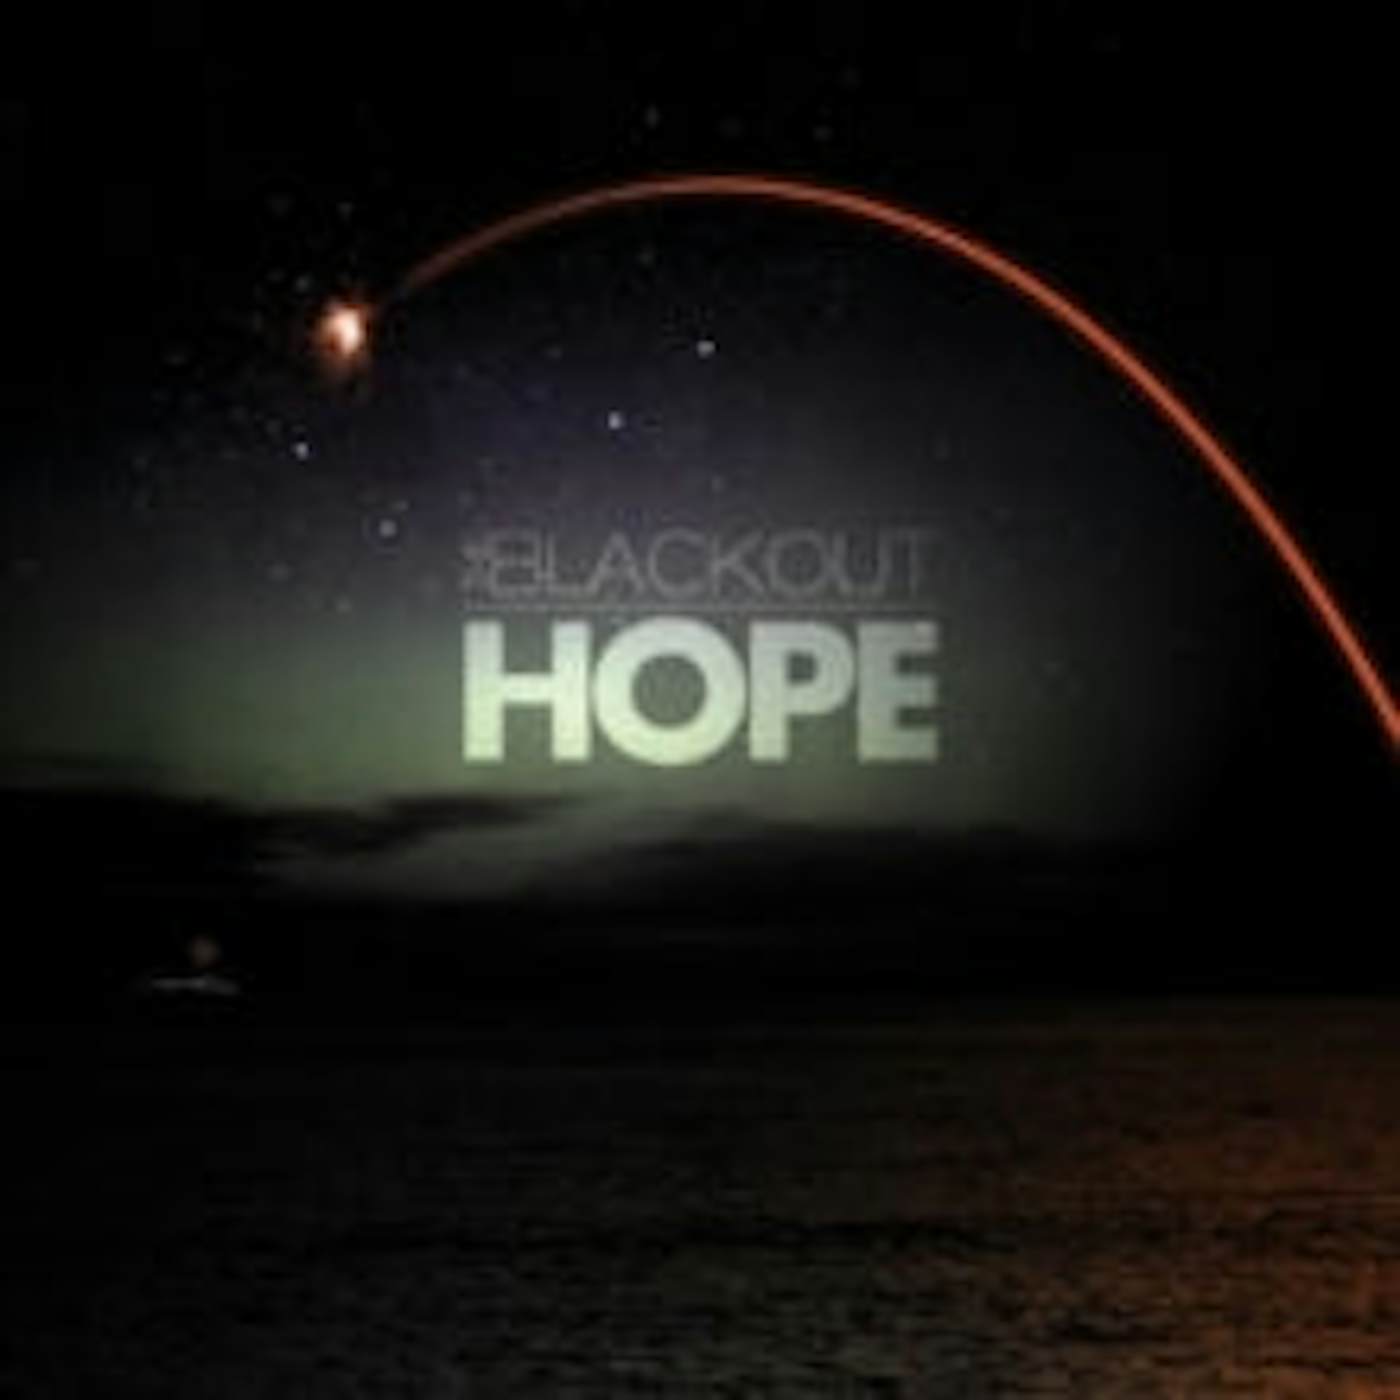 Blackout CD - Hope